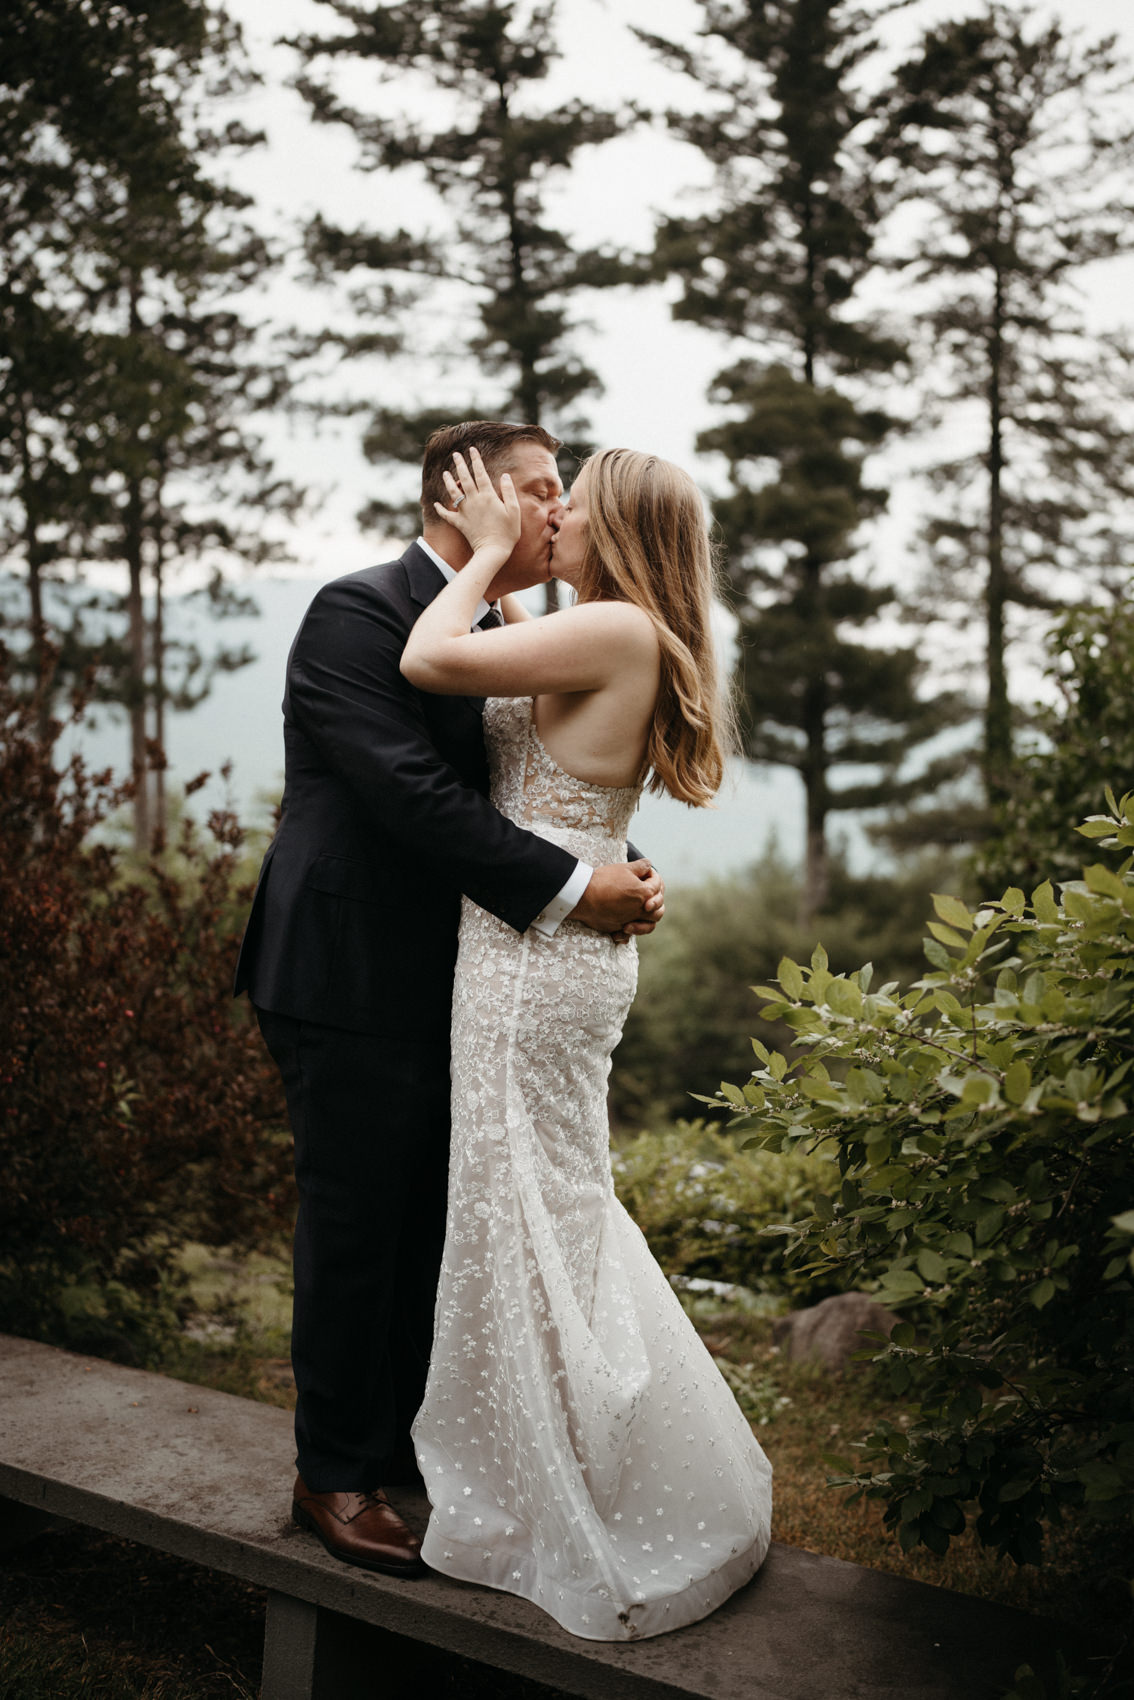 Lauren & Eric’s Onteora Mountain House Wedding